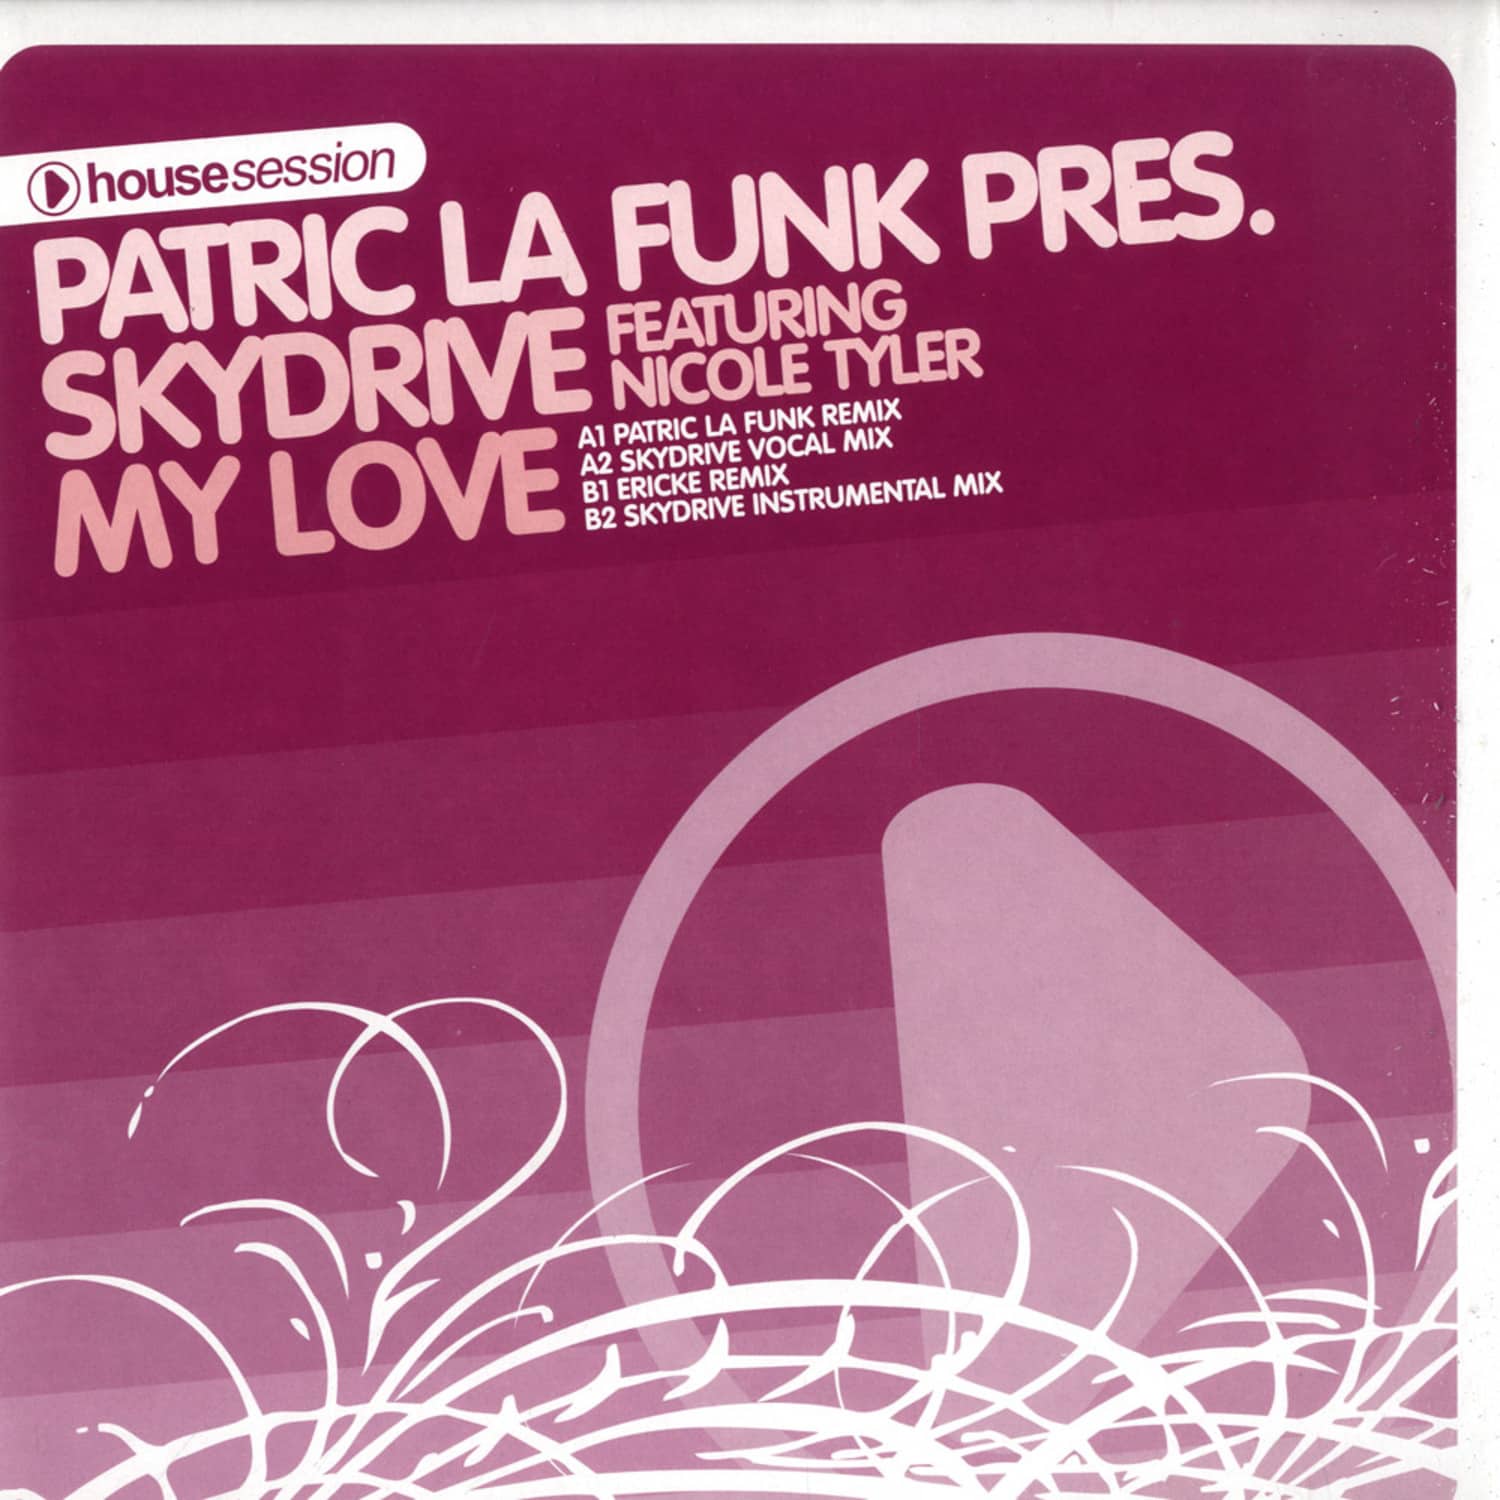 Patric La Funk Pres. Skydrive - MY LOVE